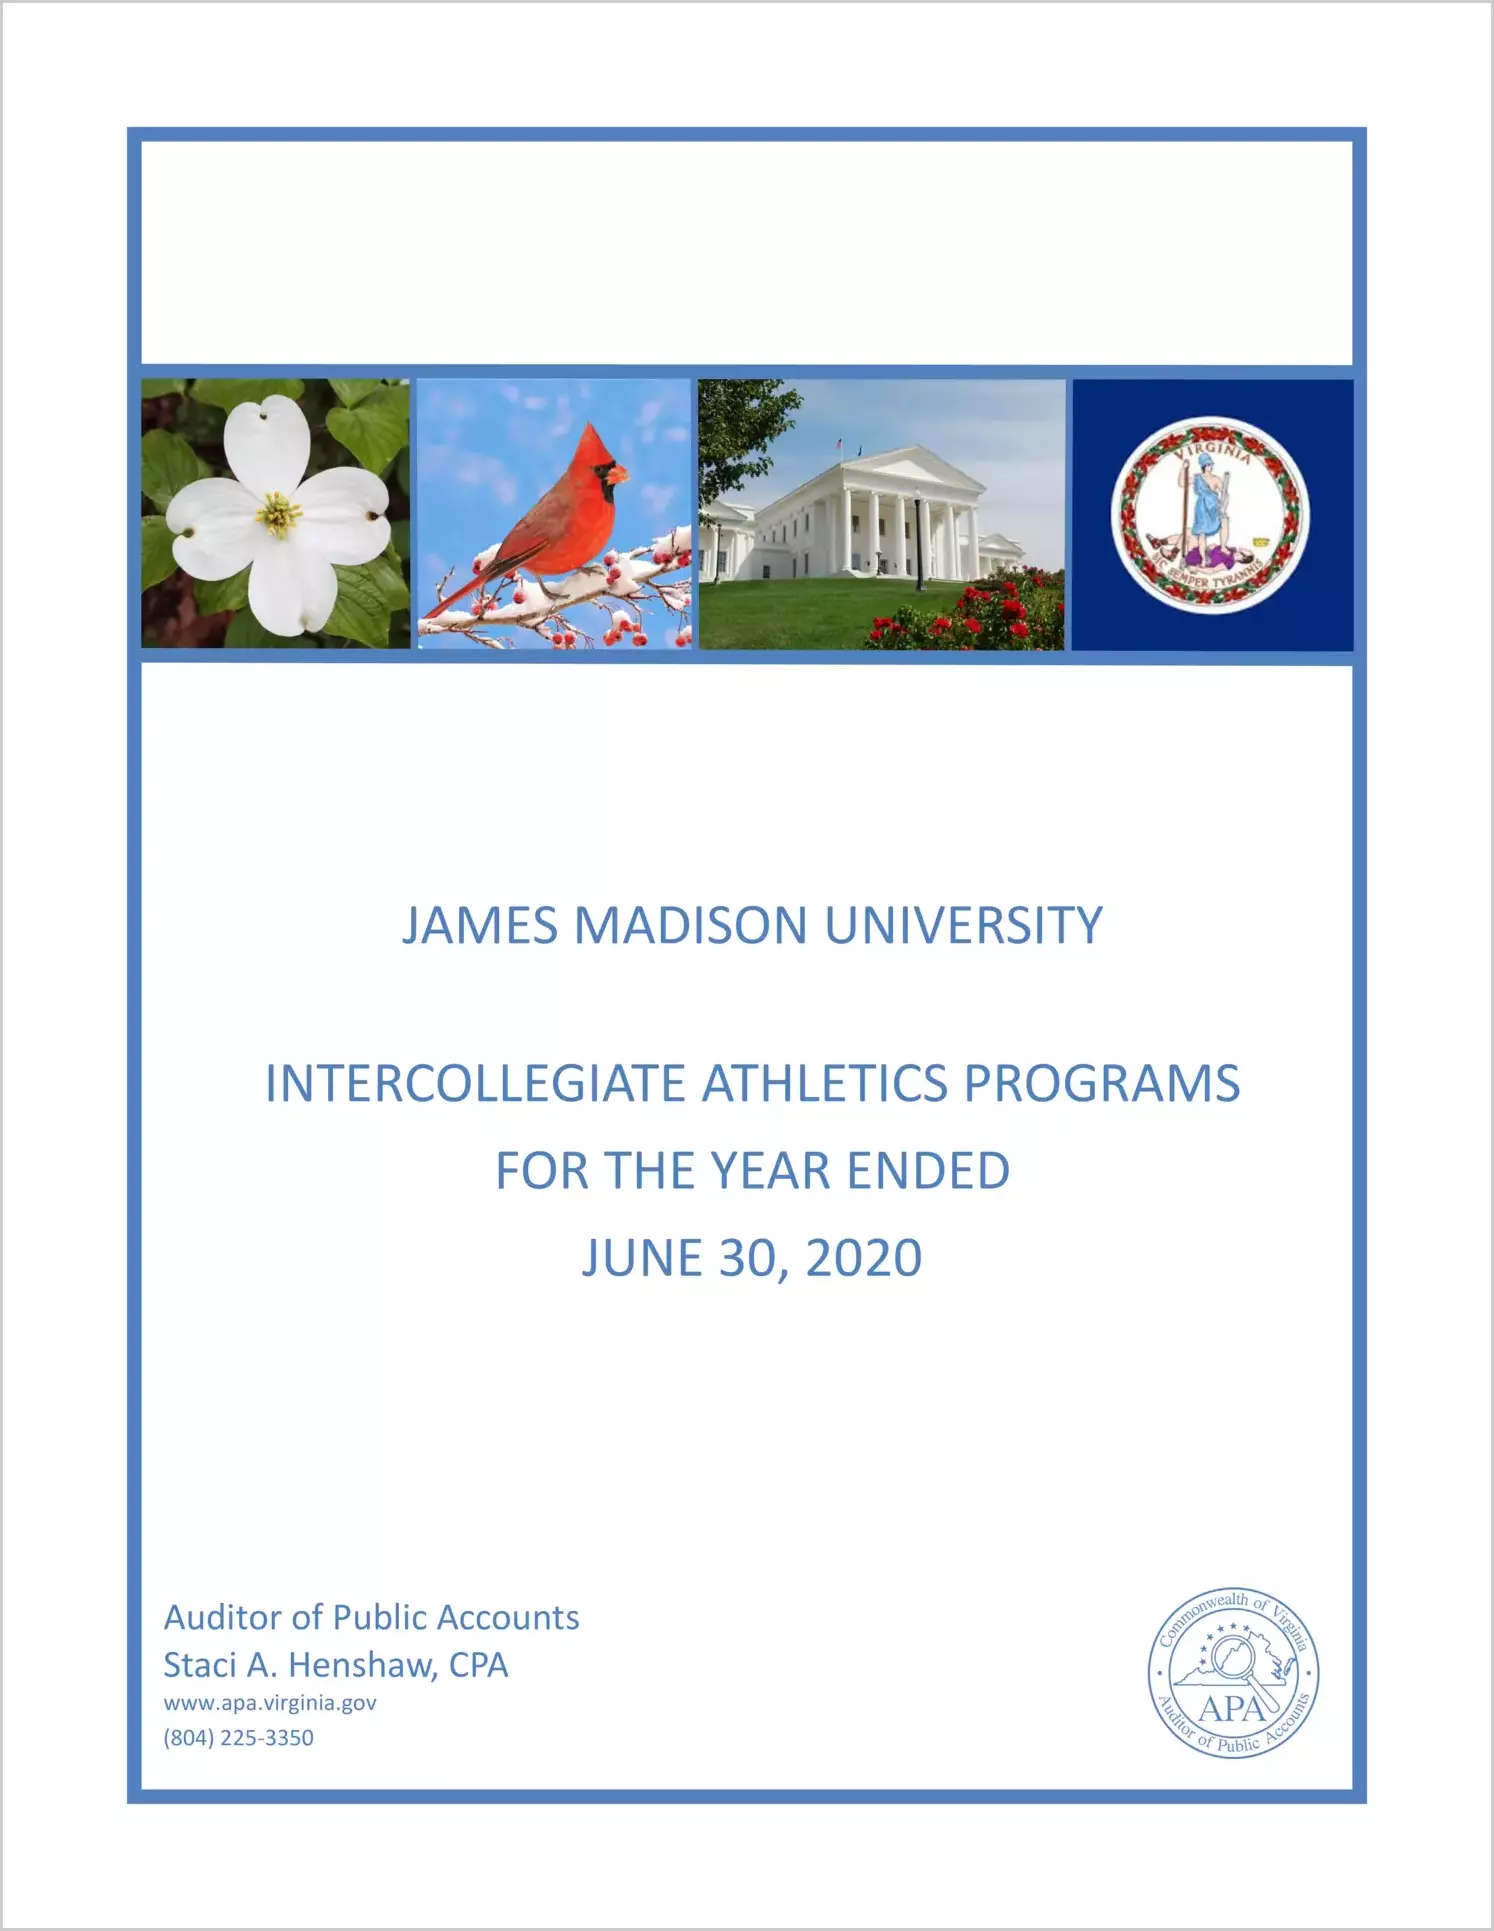 James Madison University Intercollegiate Athletics Programs for the year ended June 30, 2020